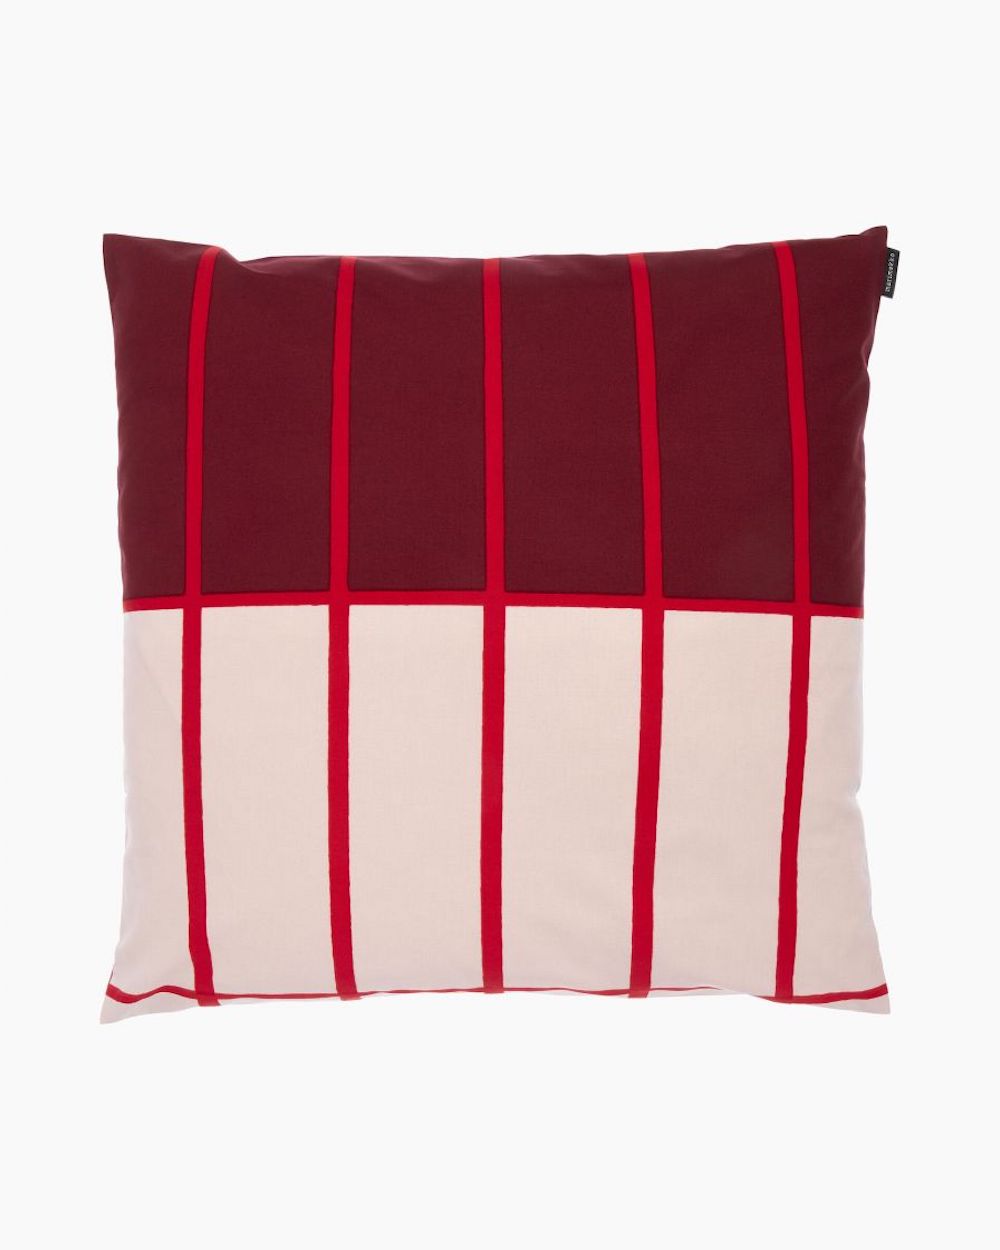 A 100 per cent cotton cushion cover with a zipper on one side using the Tiiliskivi (brick) print designed by Marimekko’s founder Armi Ratia